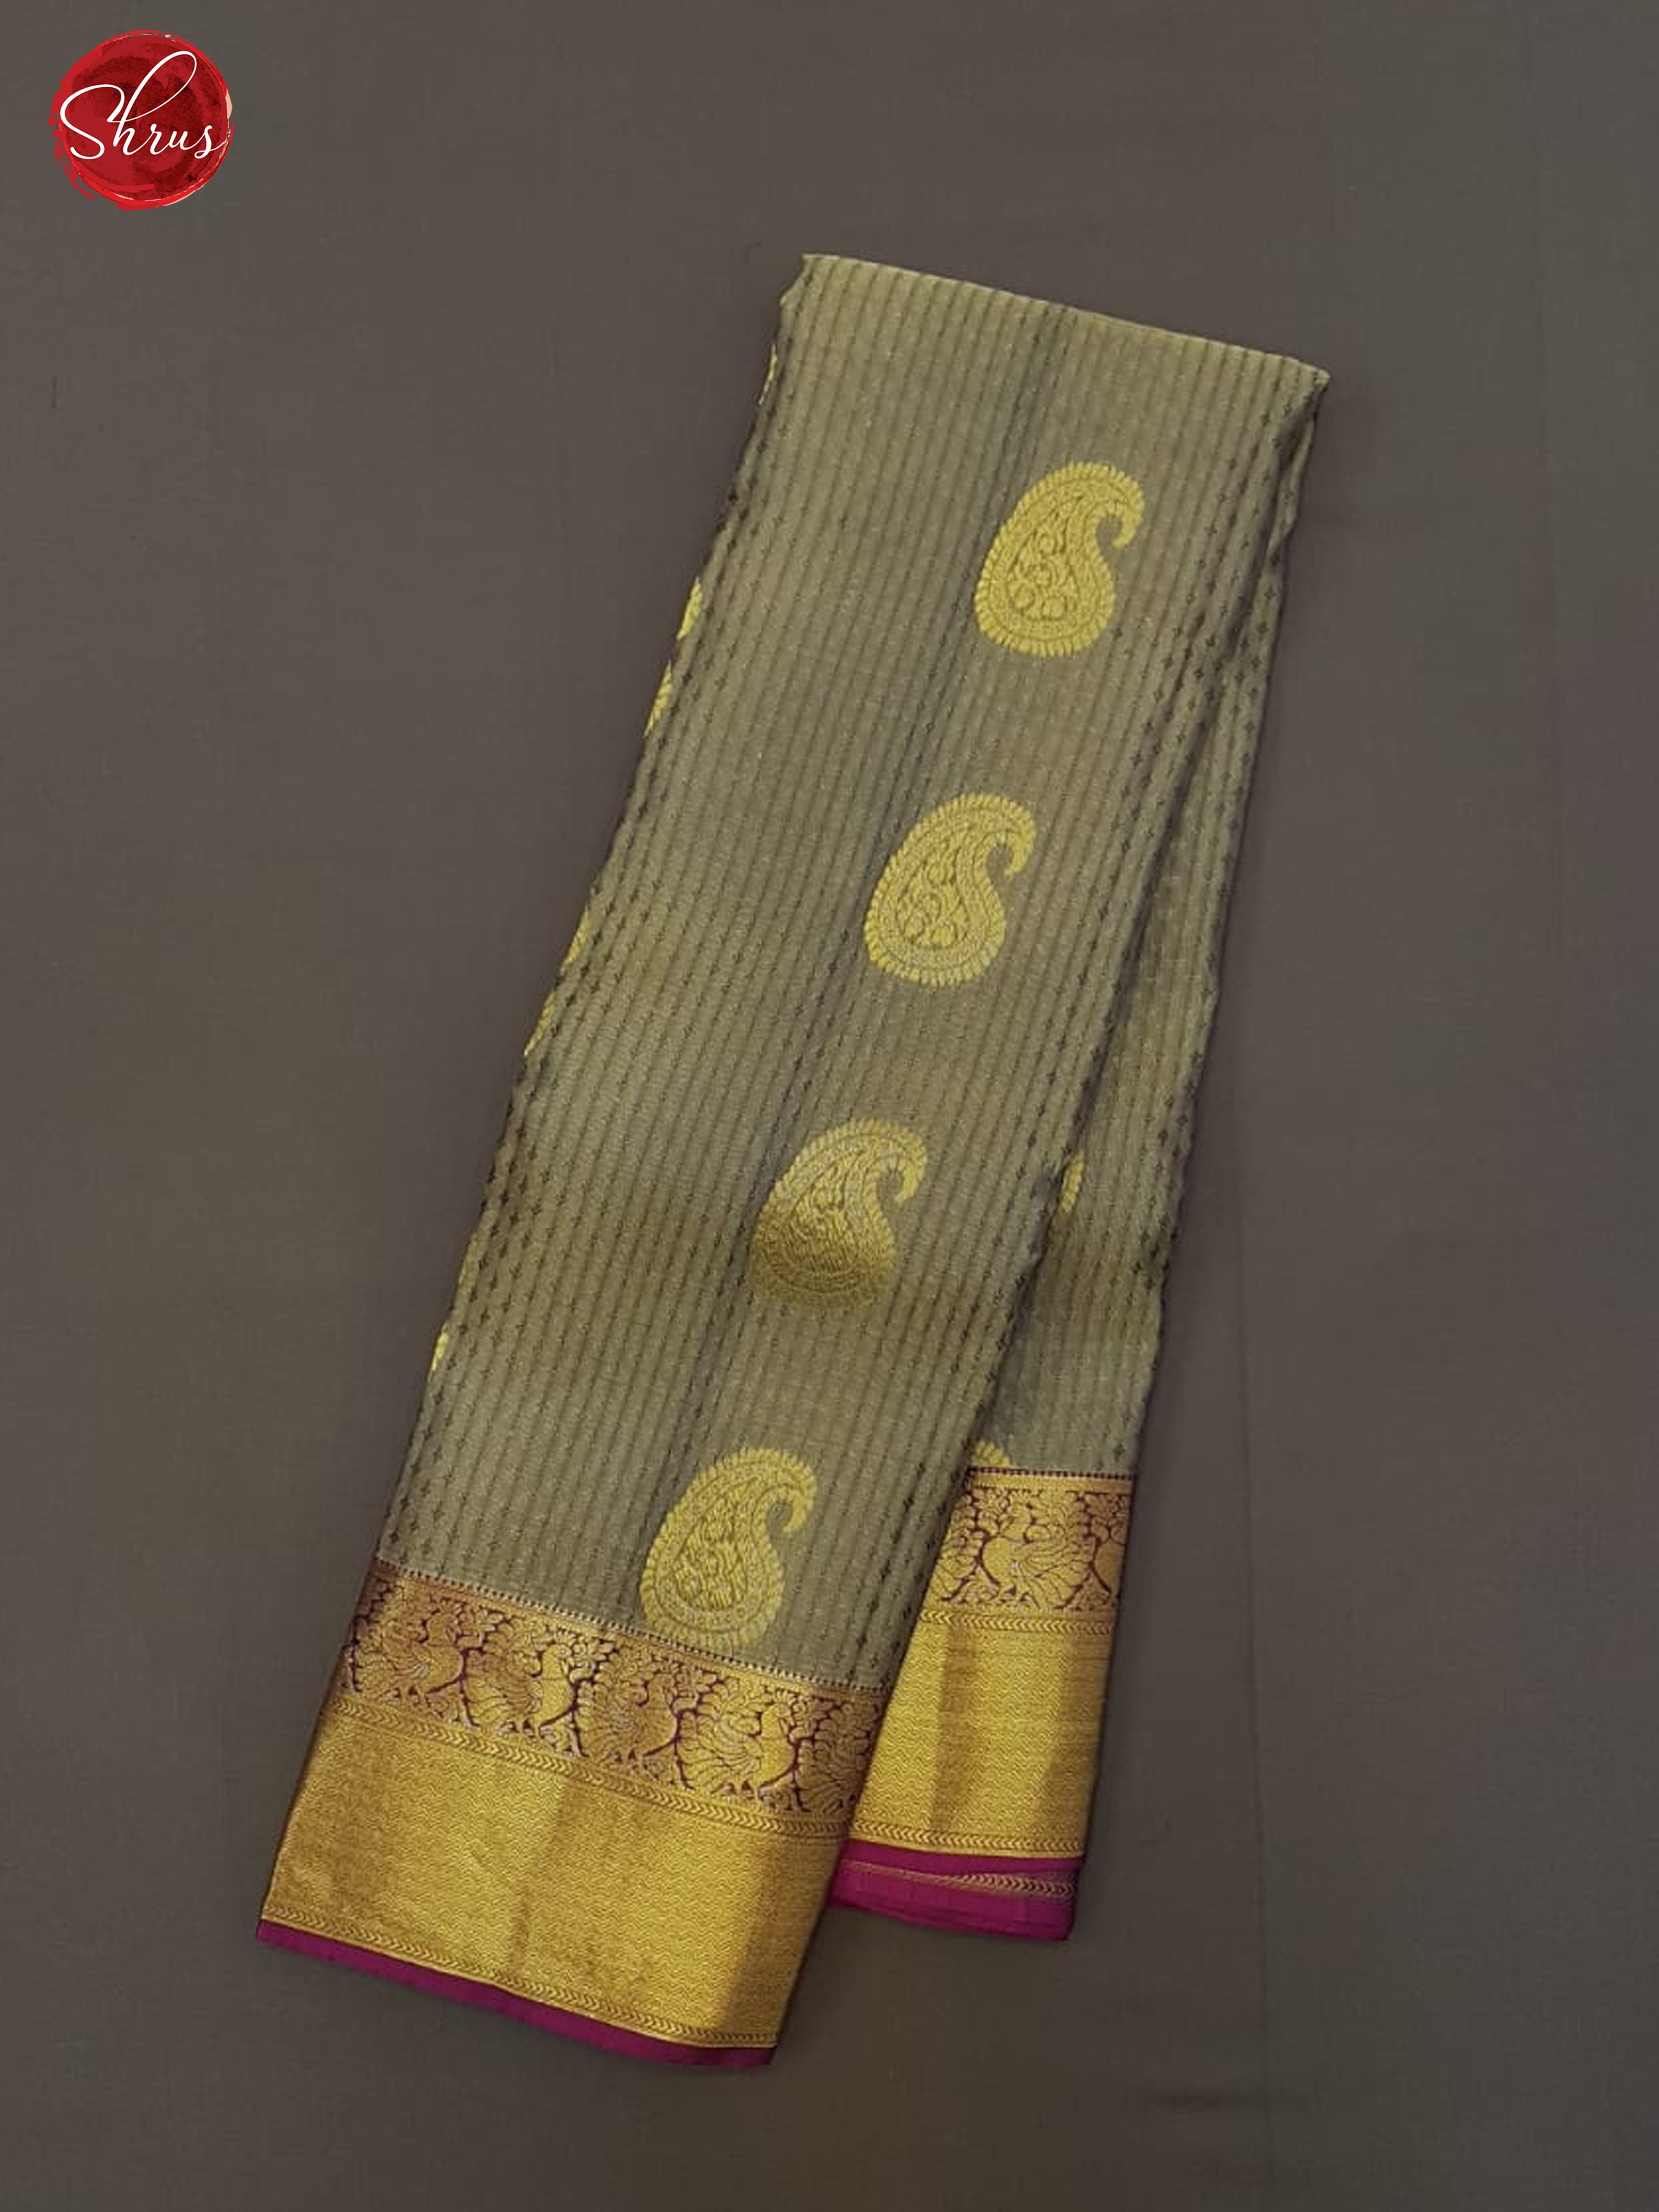 Grey & Purple -Kanchipuram (Half Pure) Saree with zari woven paisleys motifs, self jacquard  on the body & Contrast Zari Border - Shop on ShrusEternity.com